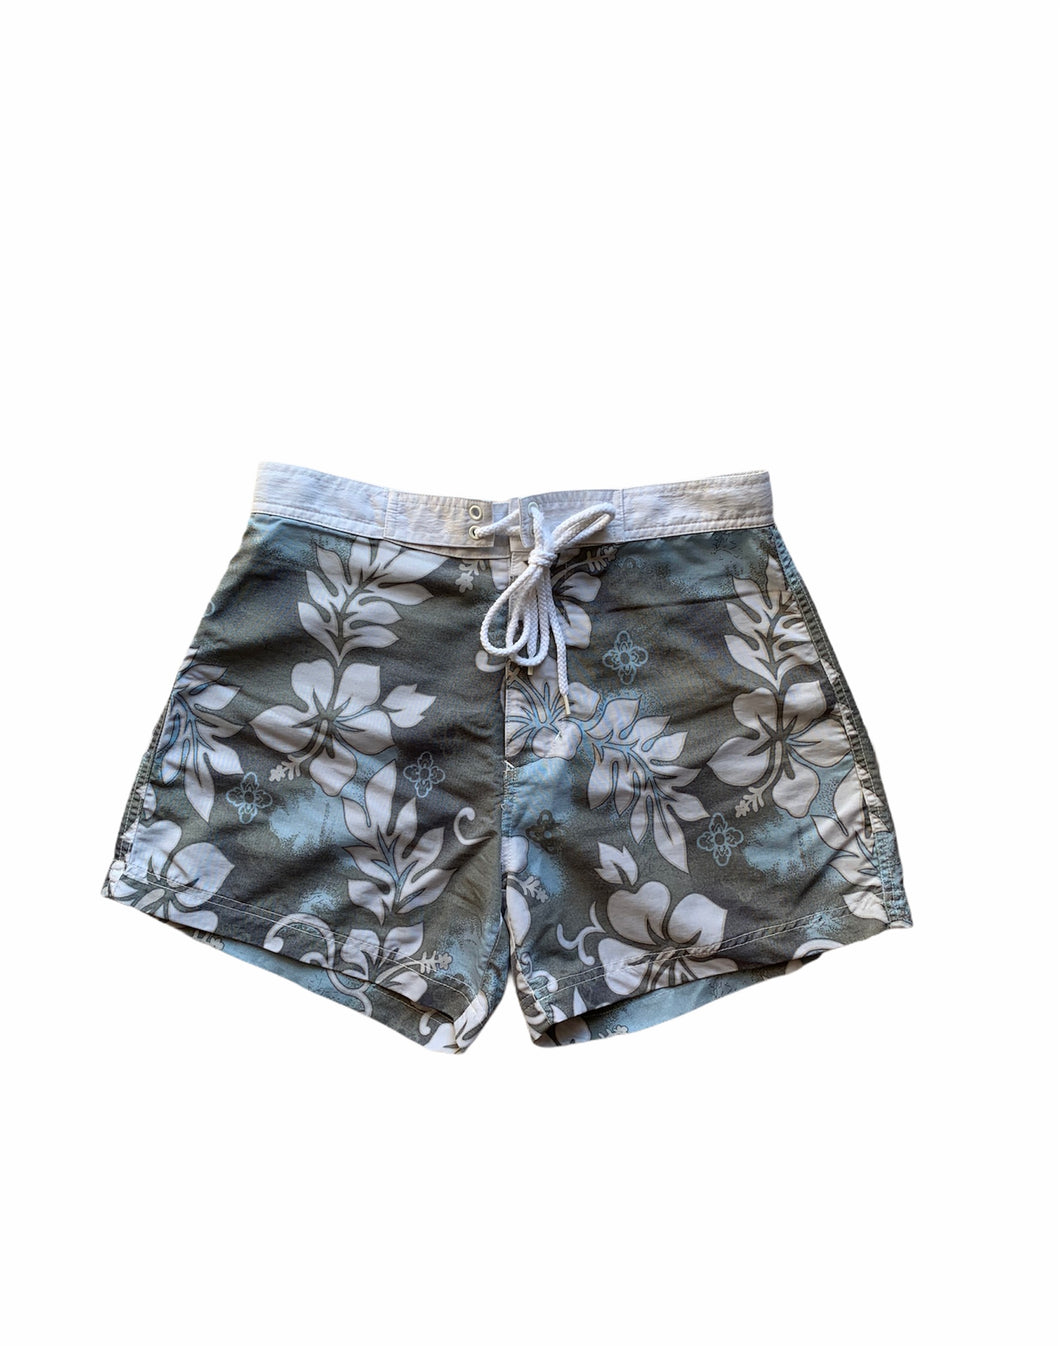 Summer highwaisted vintage shorts